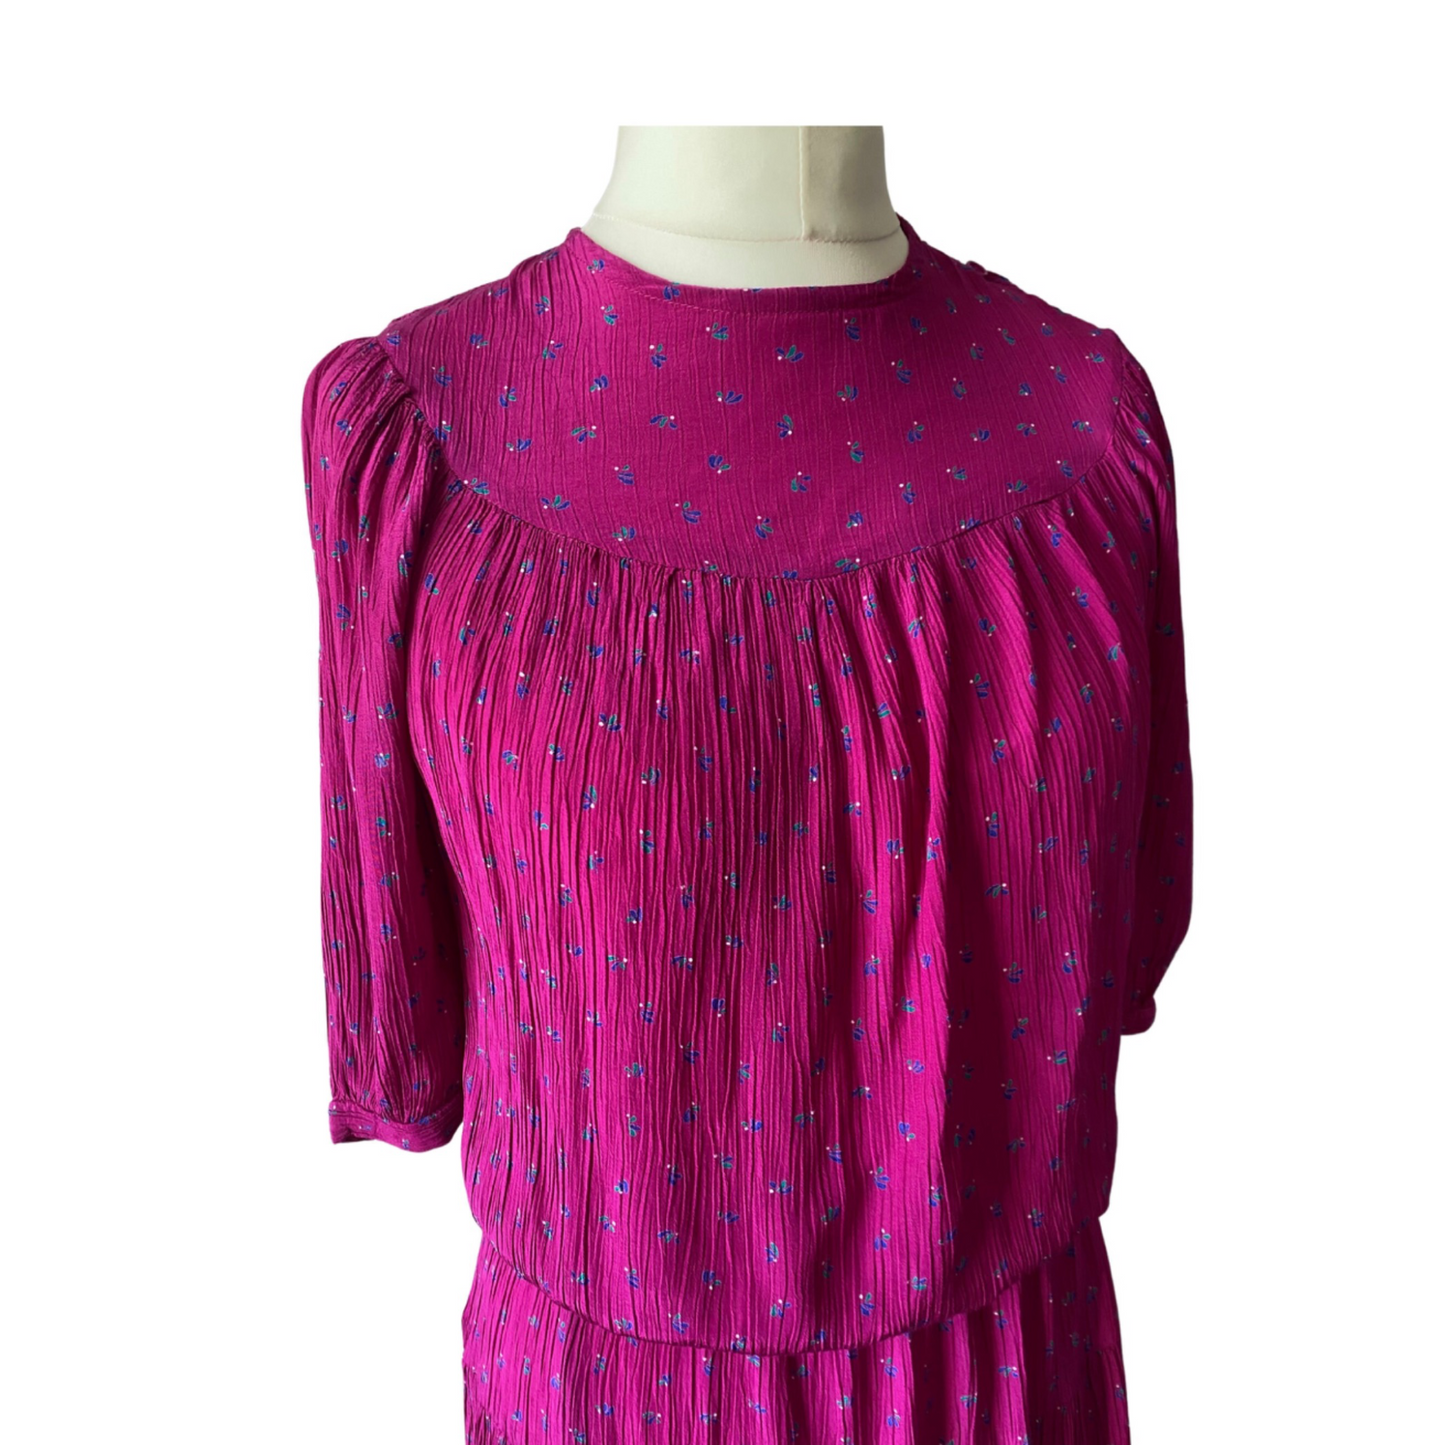 80s pink  floral print print vintage midi dress .Approx UK size 10-12